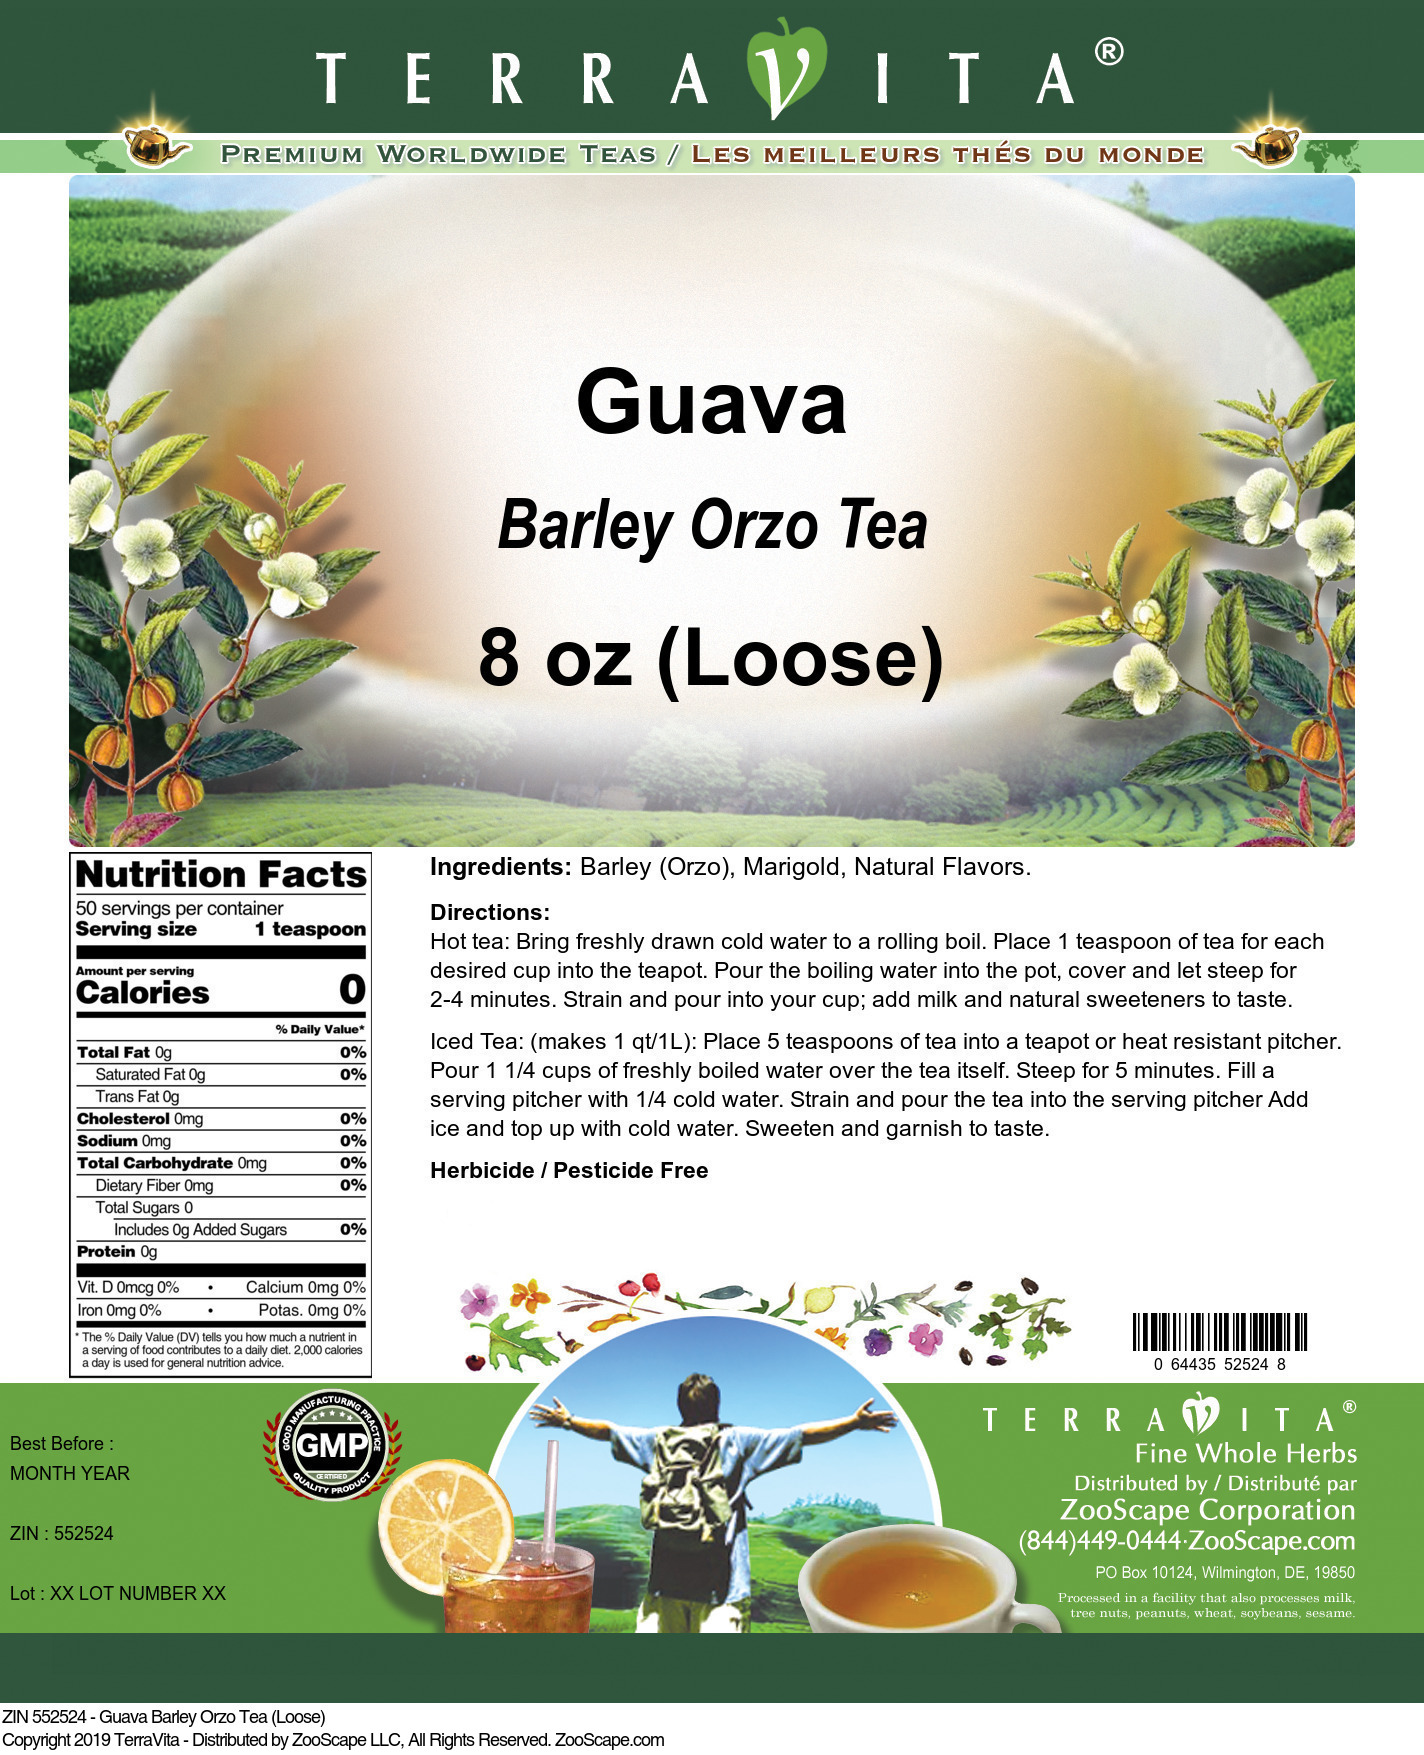 Guava Barley Orzo Tea (Loose) - Label